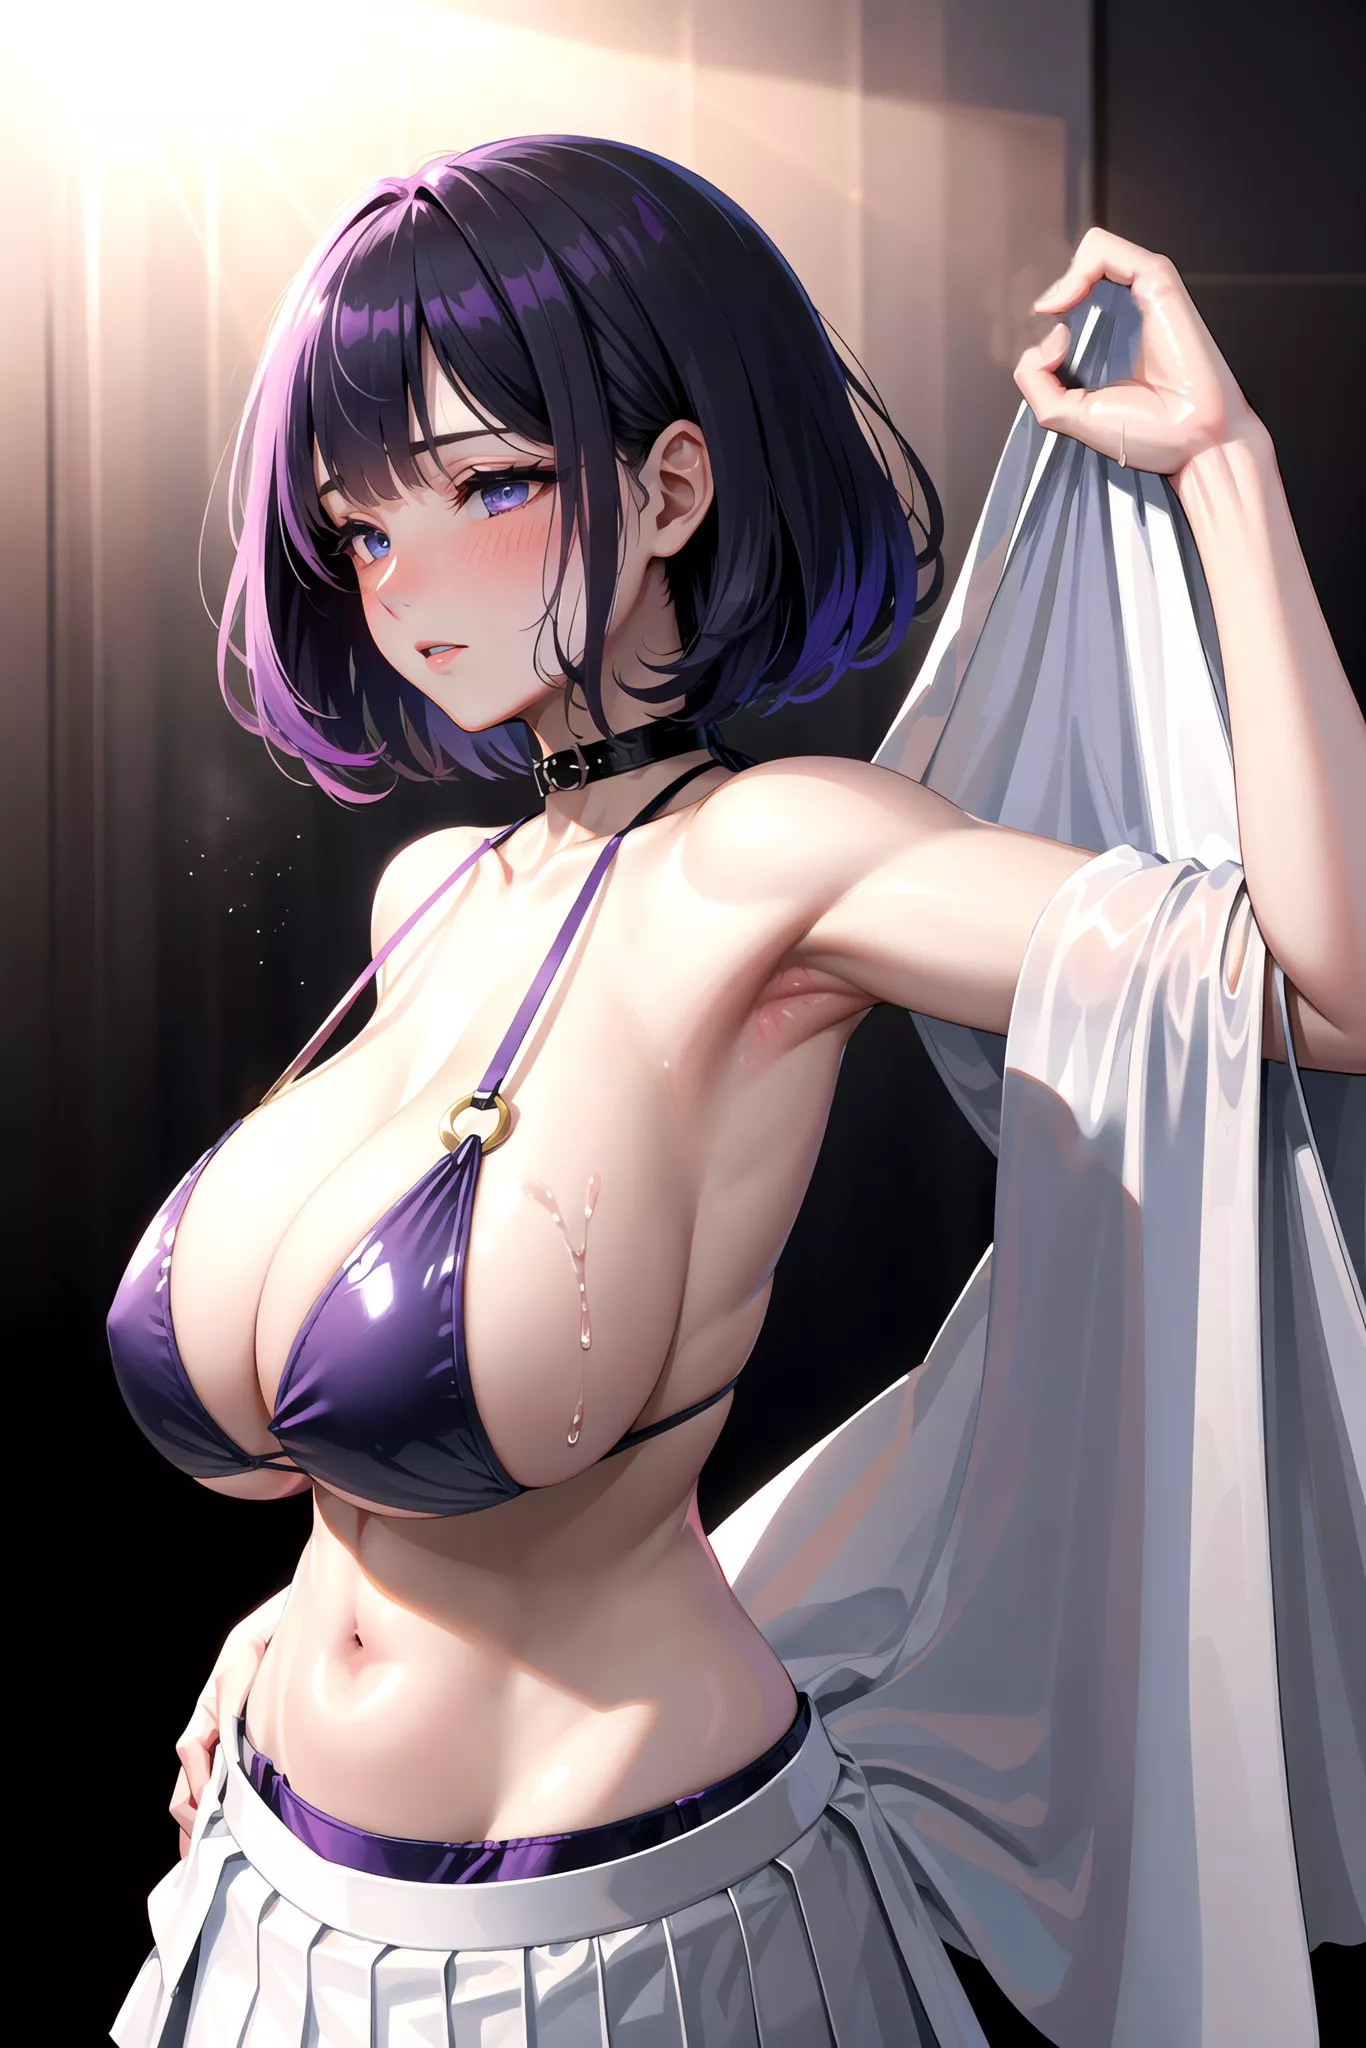 The Light Attire Suits Her Mawnori Nudes Animearmpits Nude Pics Org